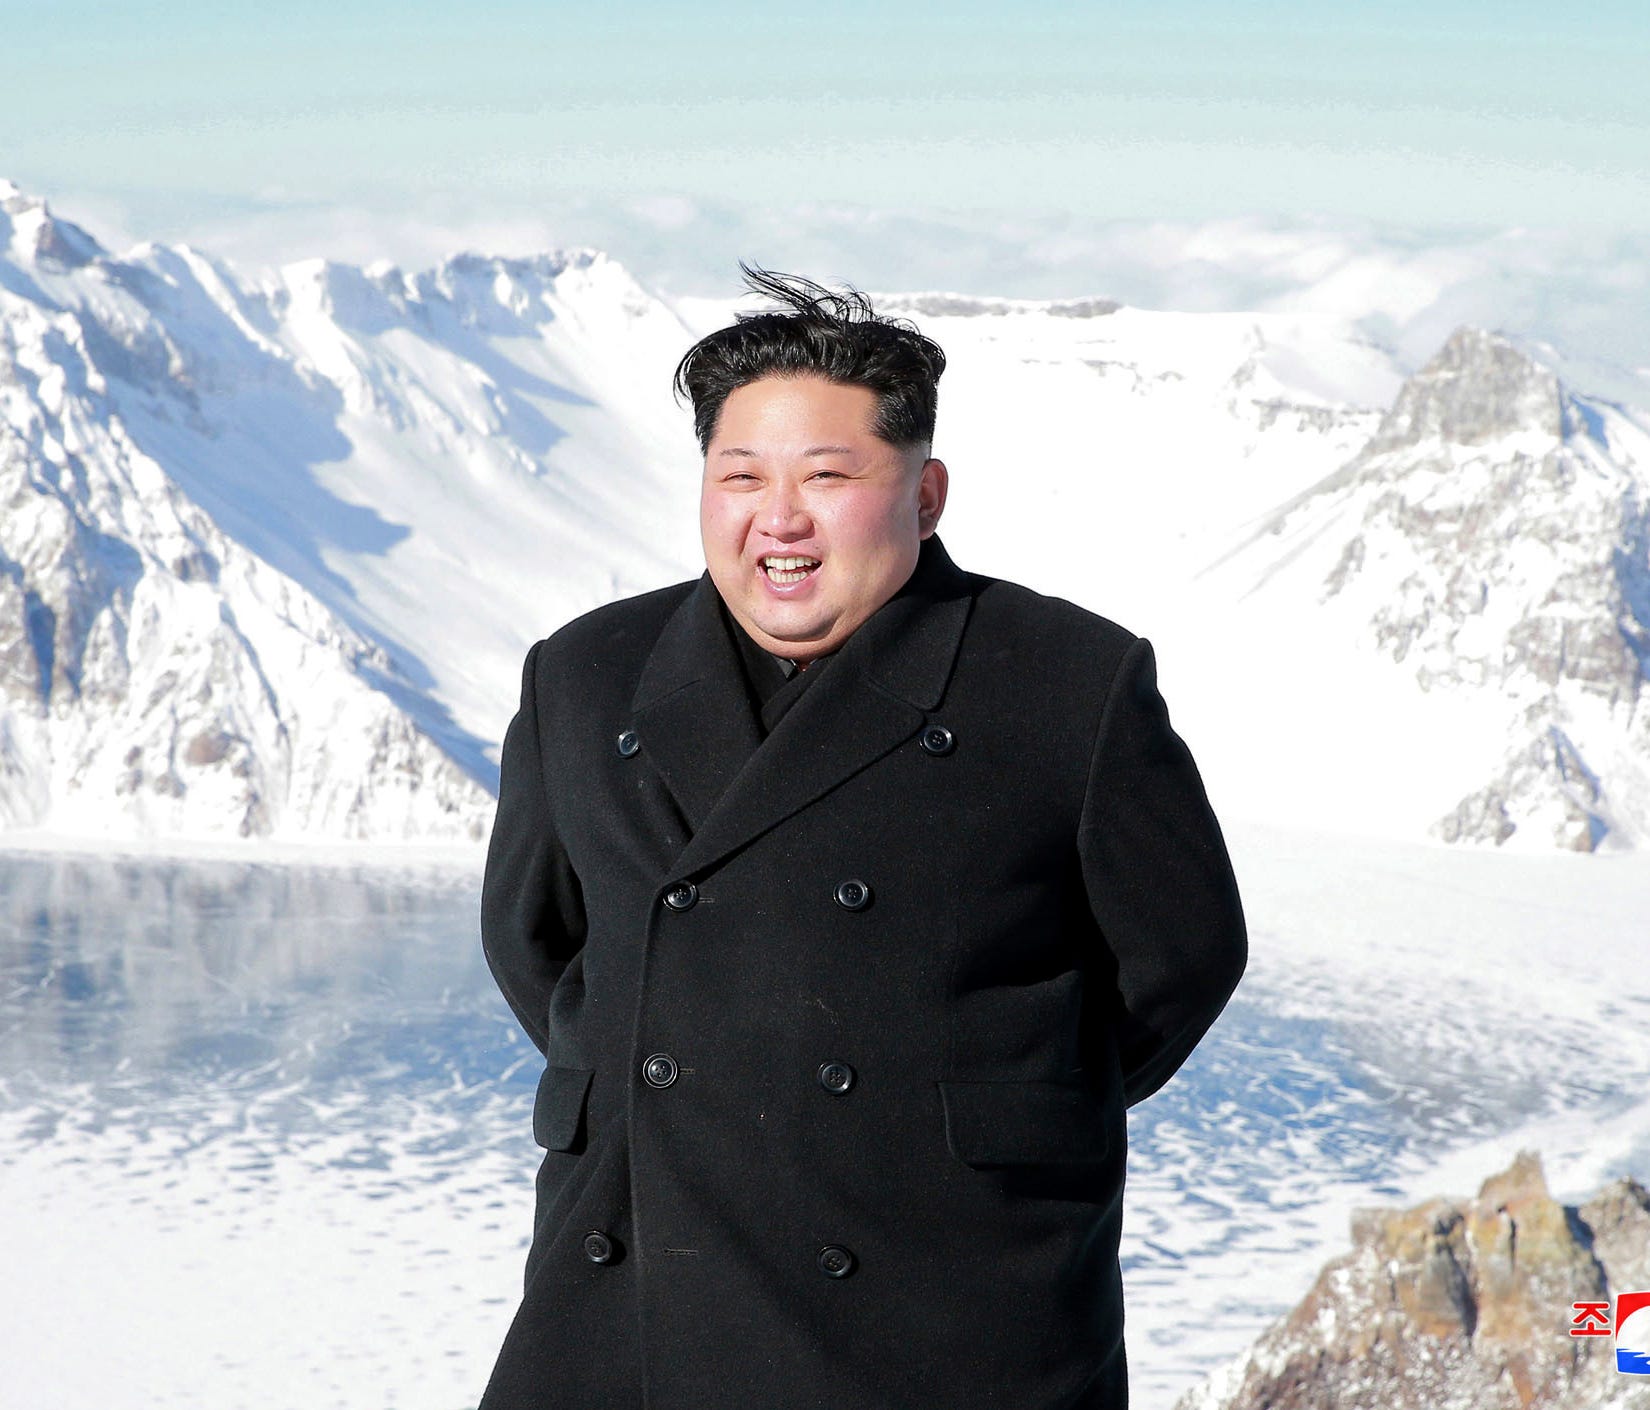 North Korean leader Kim Jong Un smiles as Kim climbed Mt. Paektu, Ryanggang Province, North Korea.